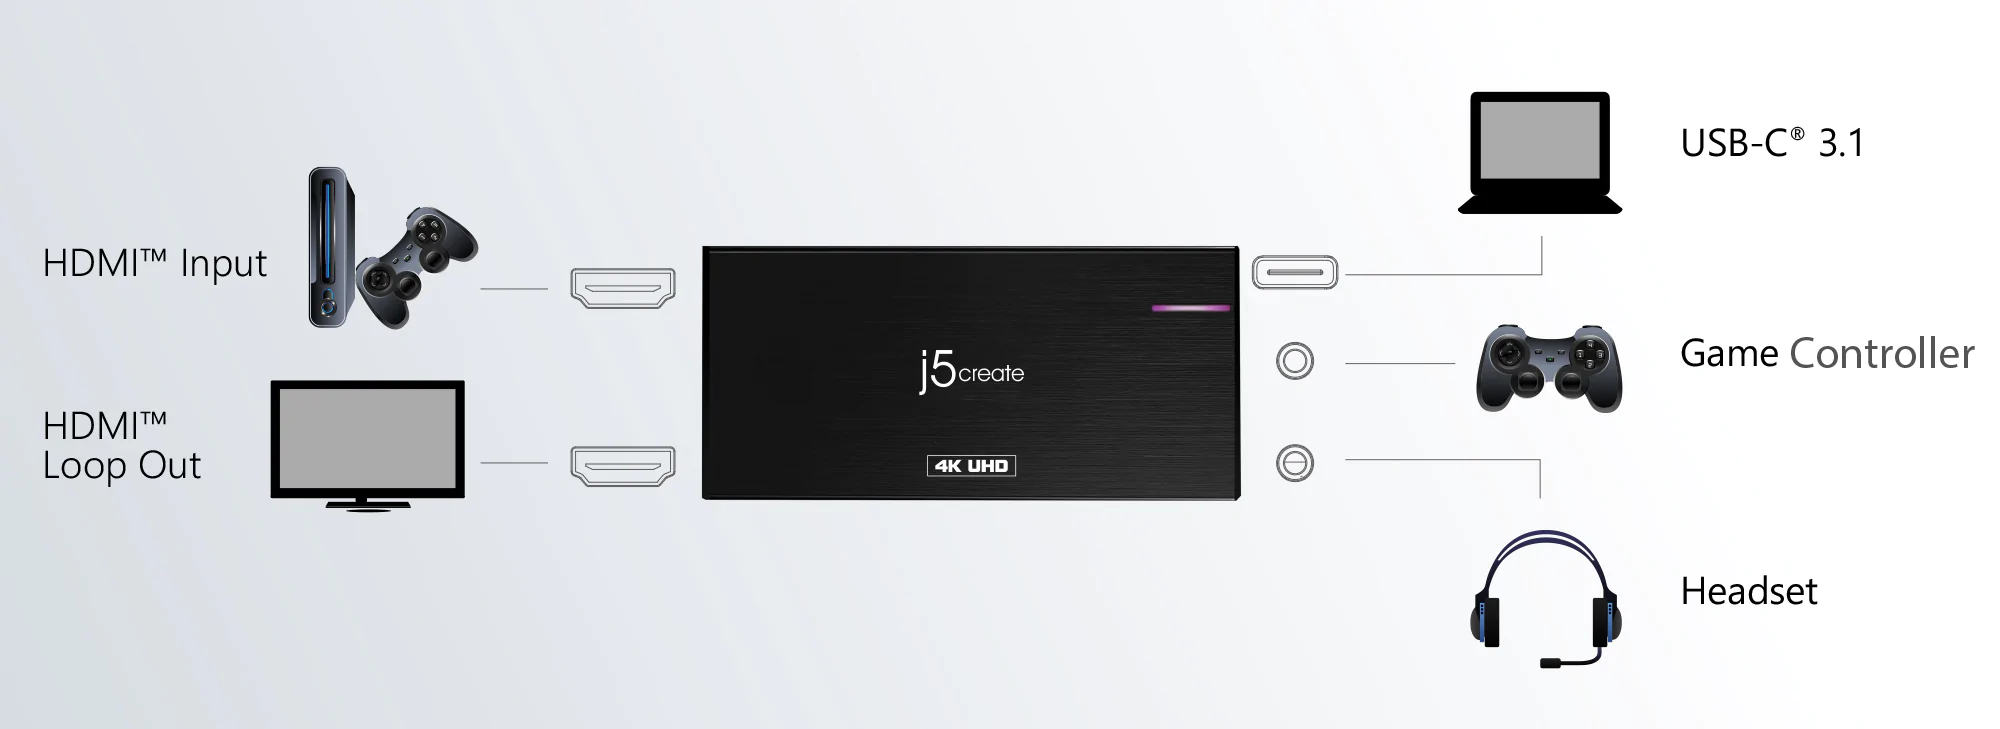 J5 Create HDMI to USB C 3.1 Game Capture Station - JVA04